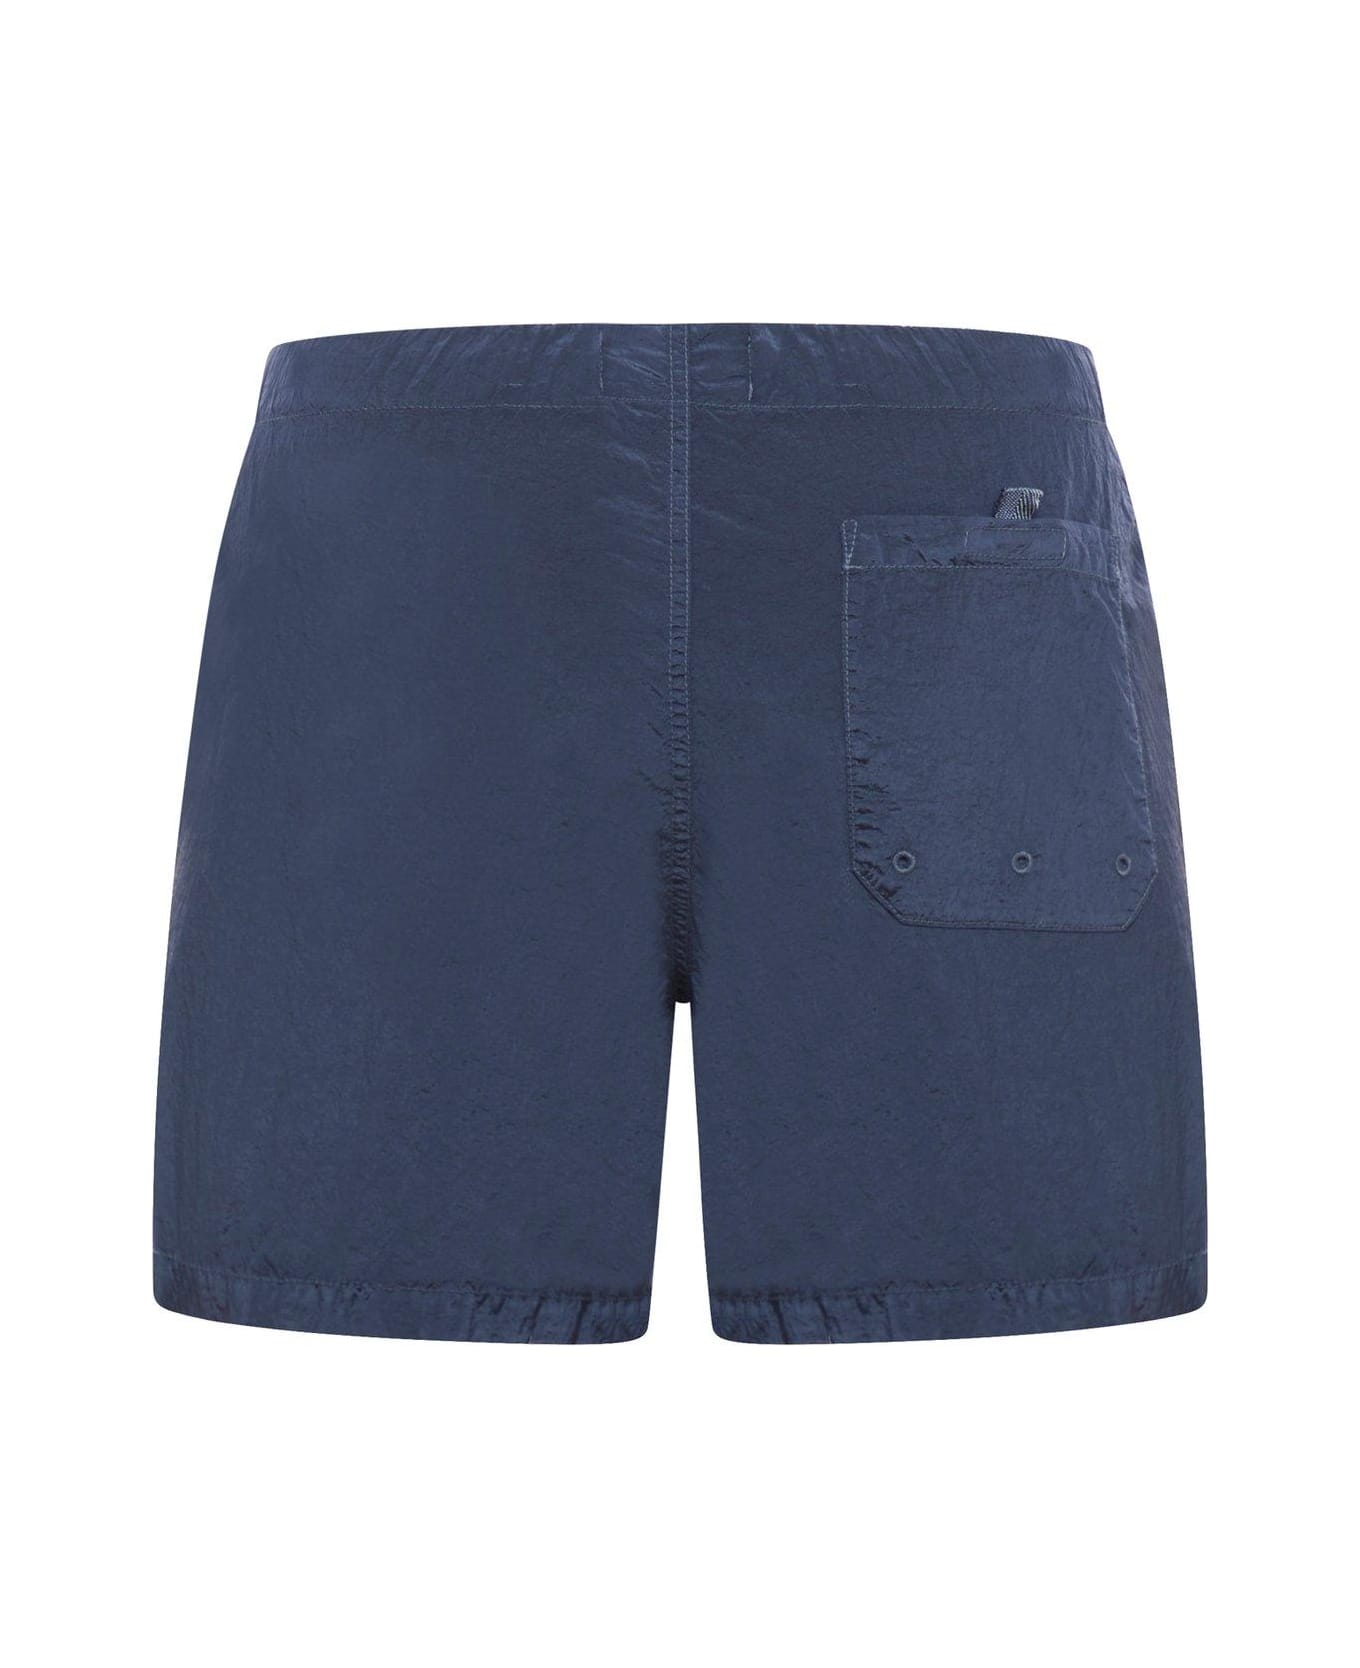 Stone Island Logo Patch Drawstring Shorts - Blue スイムトランクス